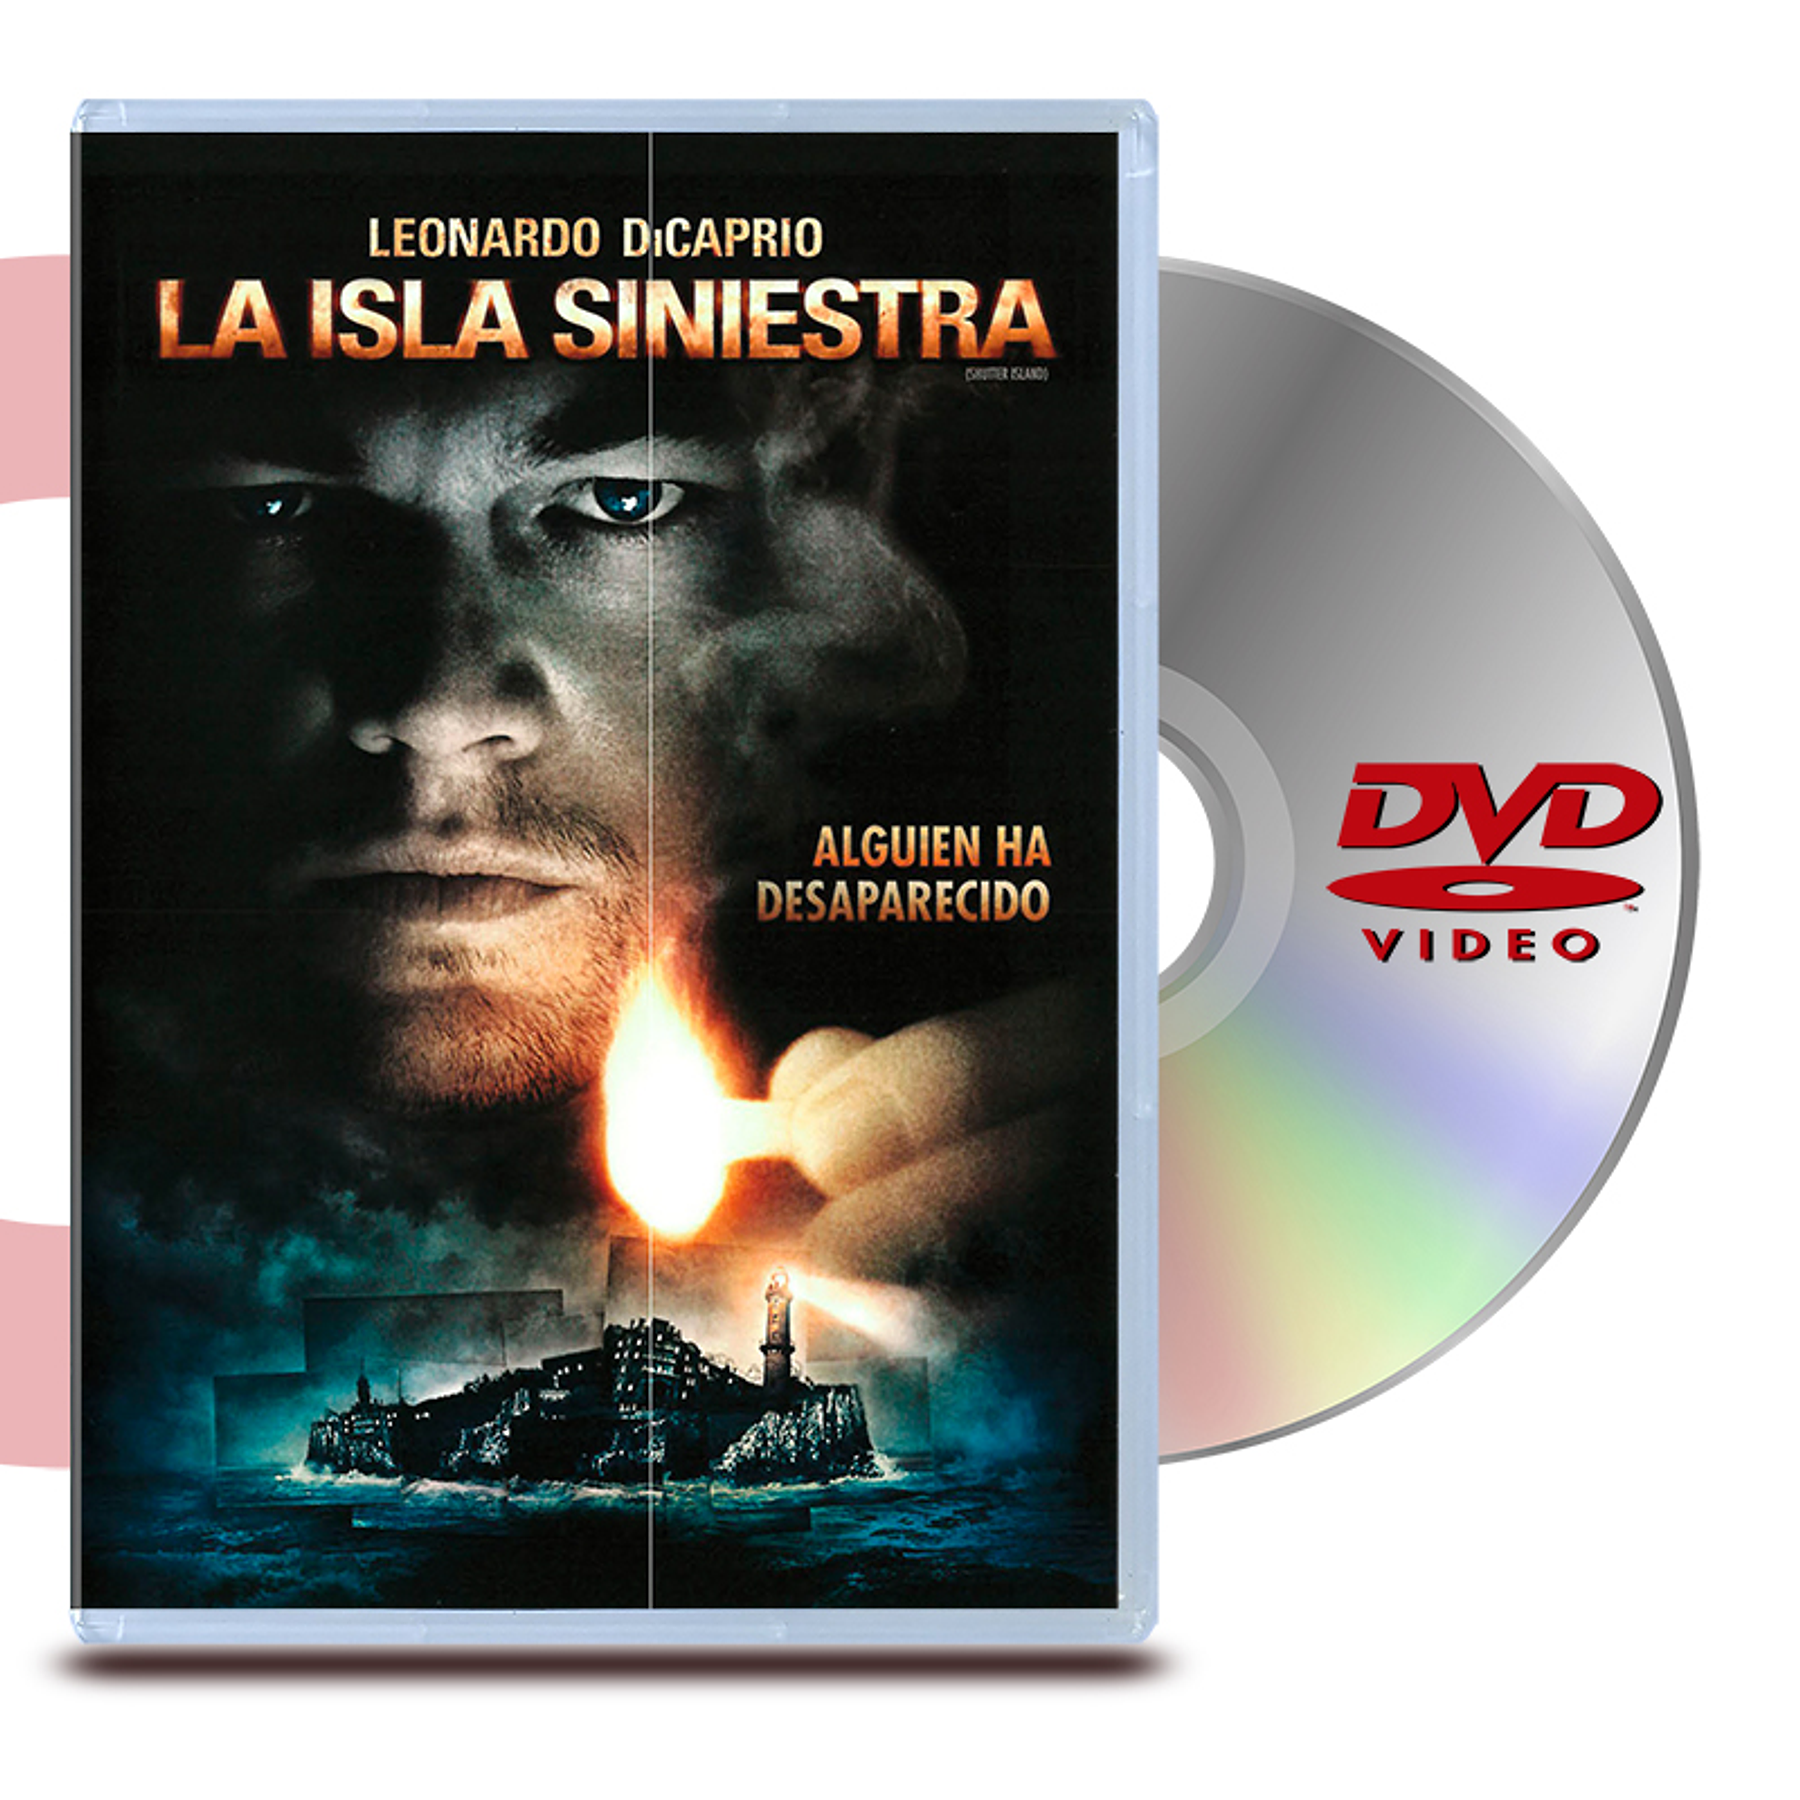 DVD LA ISLA SINIESTRA